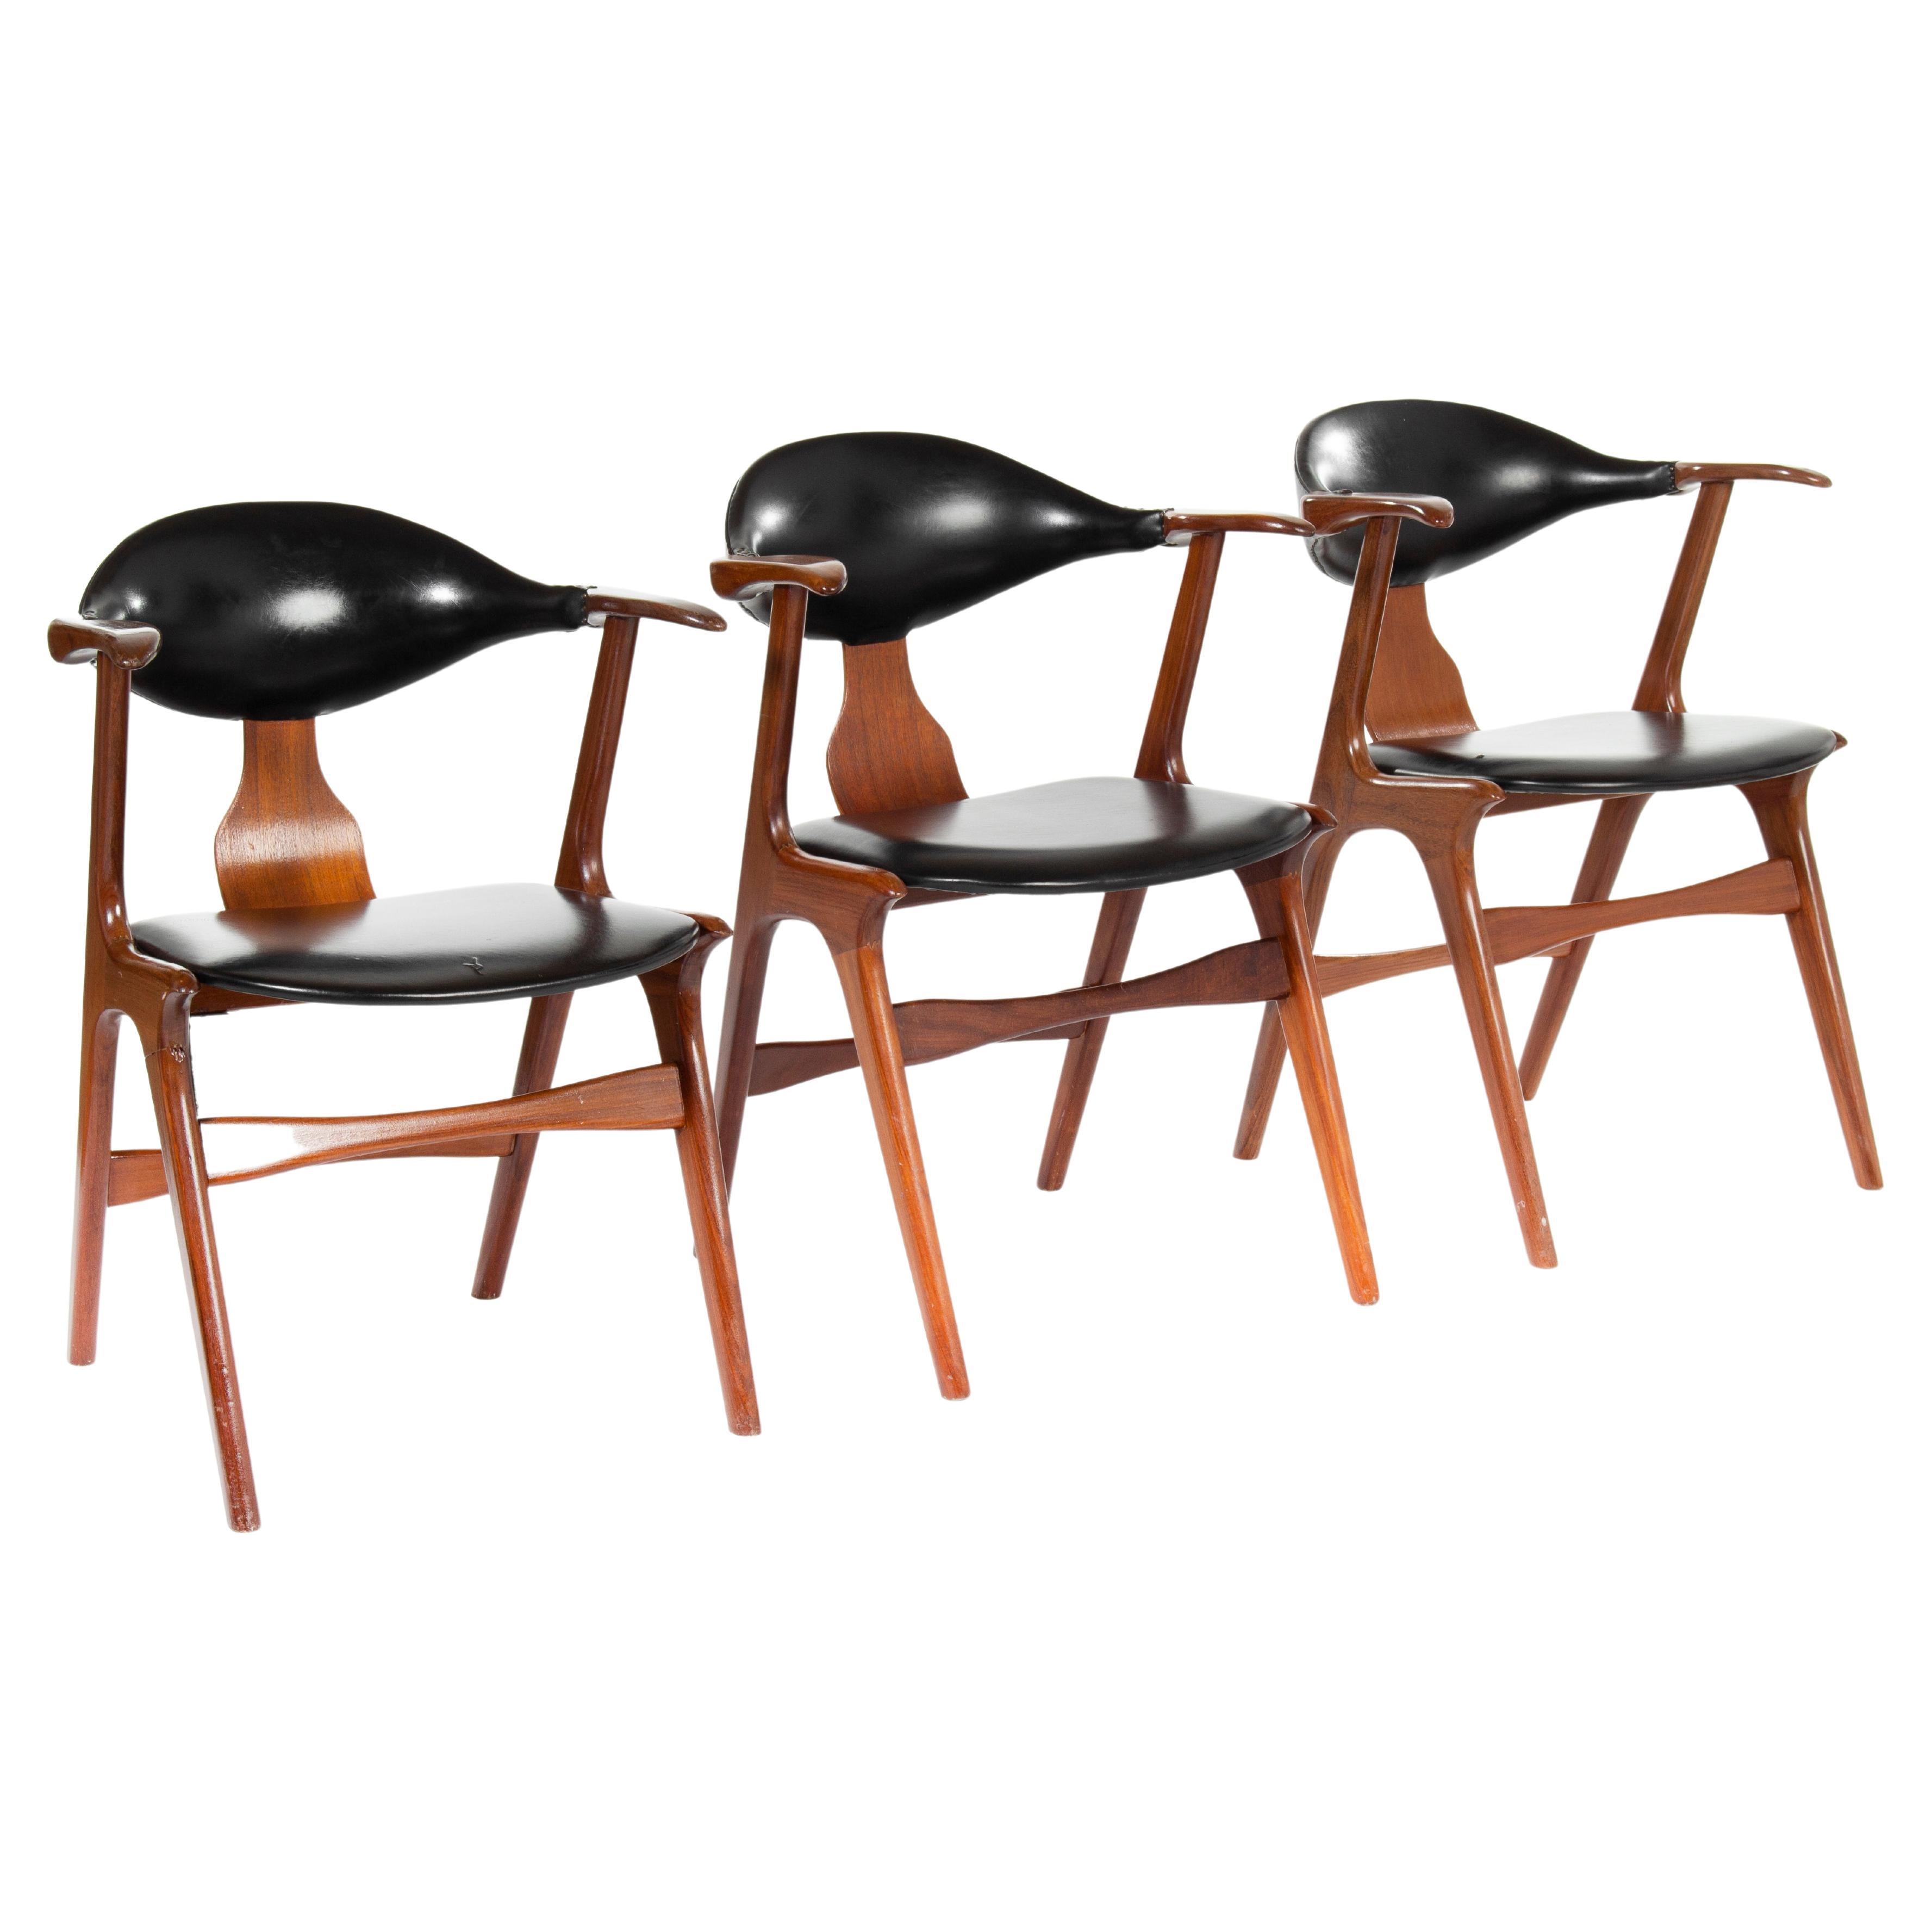 Louis Van Teeffelen AWA Holland Cow Horn Chairs, 1950s, '3 Pieces' For Sale